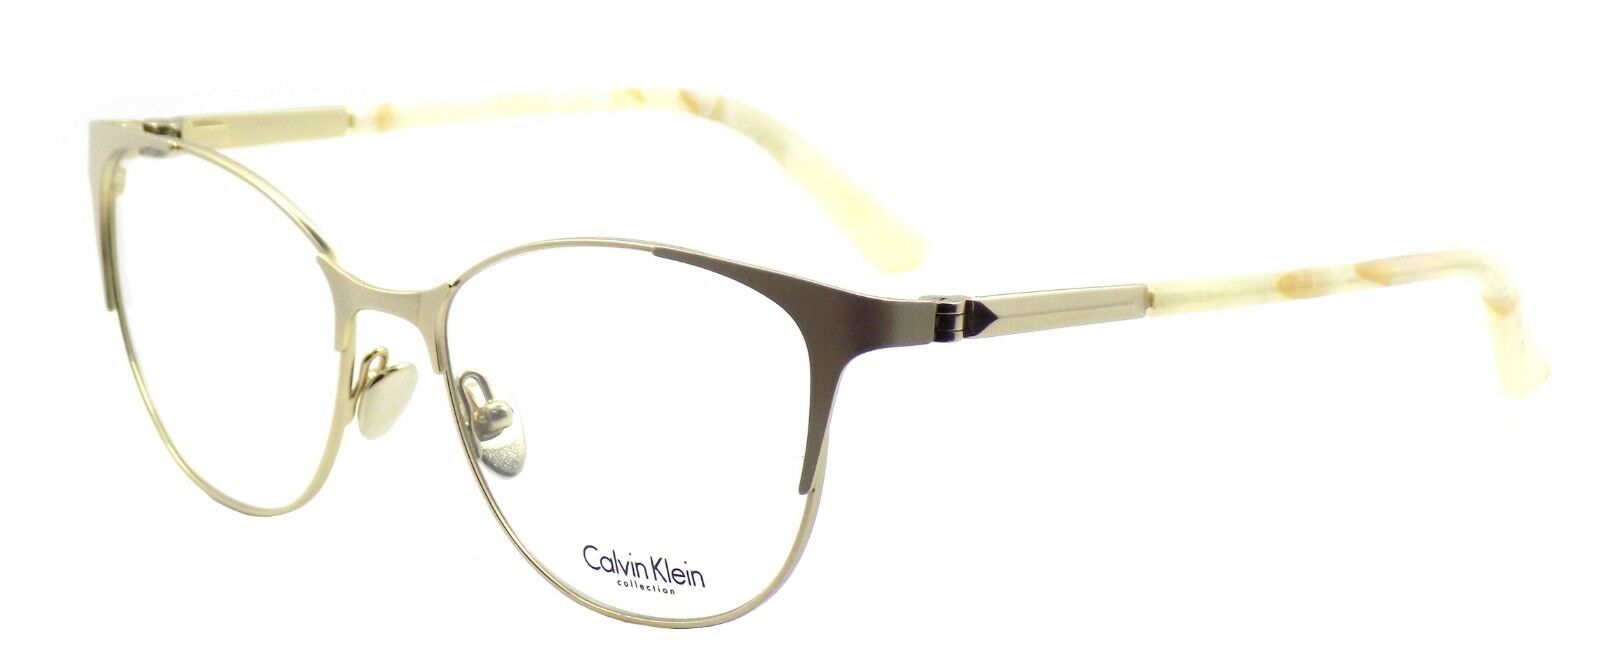 1-Calvin Klein CK8041 101 Women's Eyeglasses Frames Bone / Gold 53-16-135 + CASE-750779110683-IKSpecs